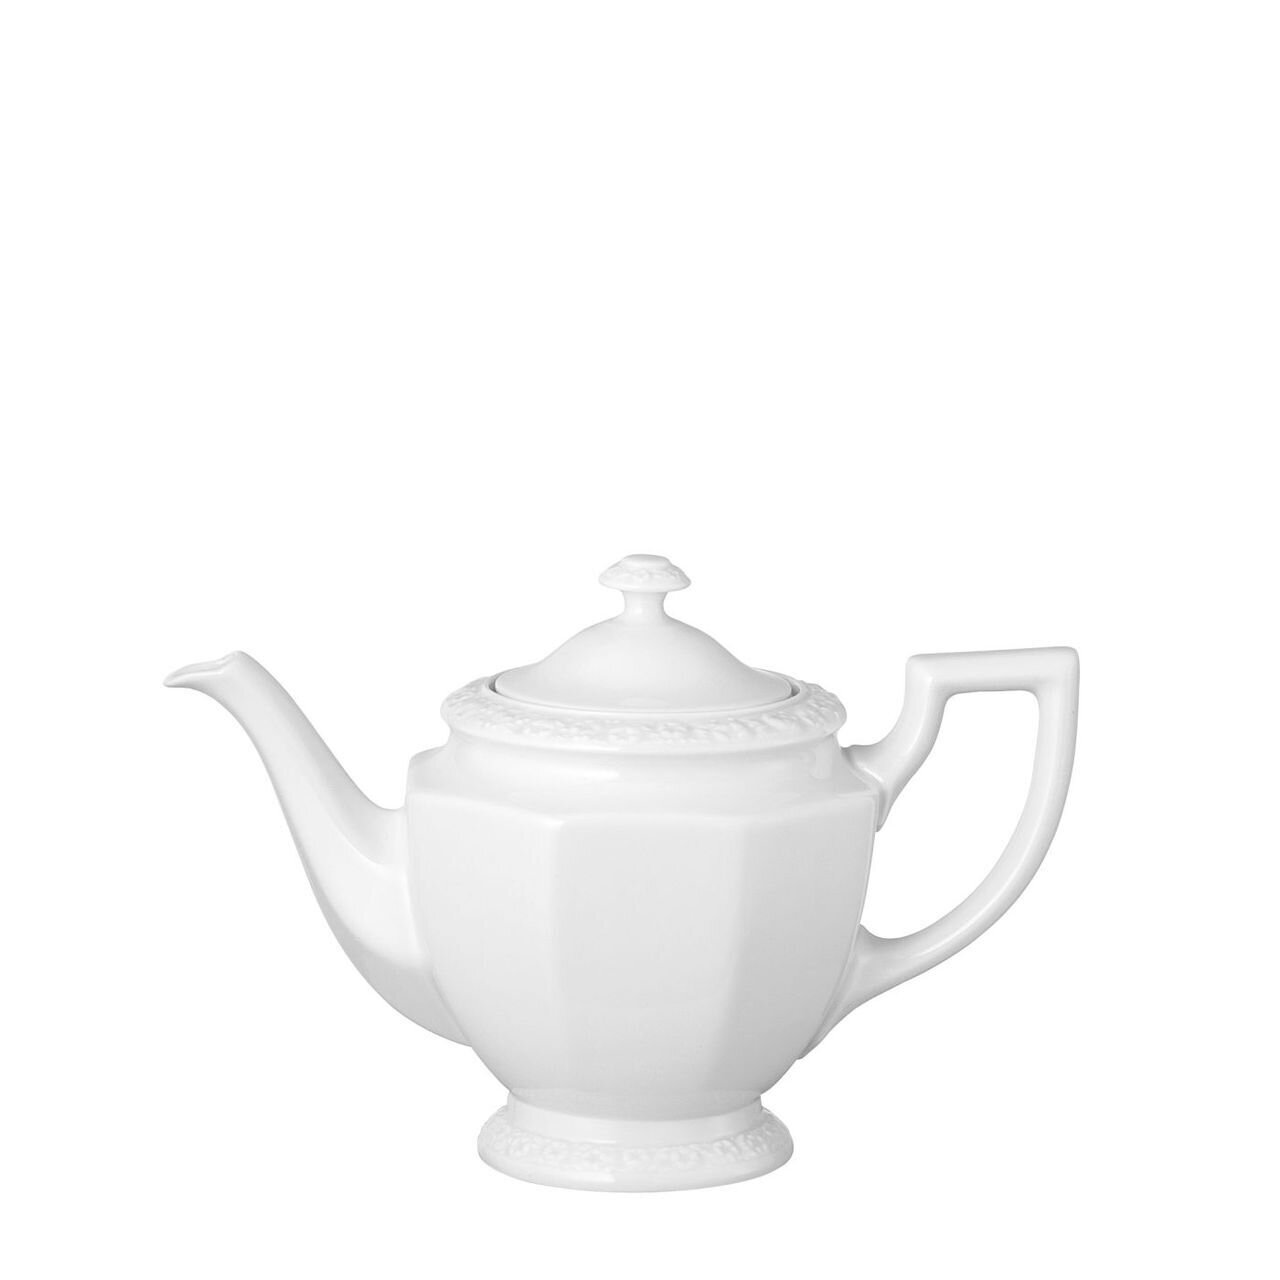 Rosenthal Maria White Tea Pot Large 42 ounce